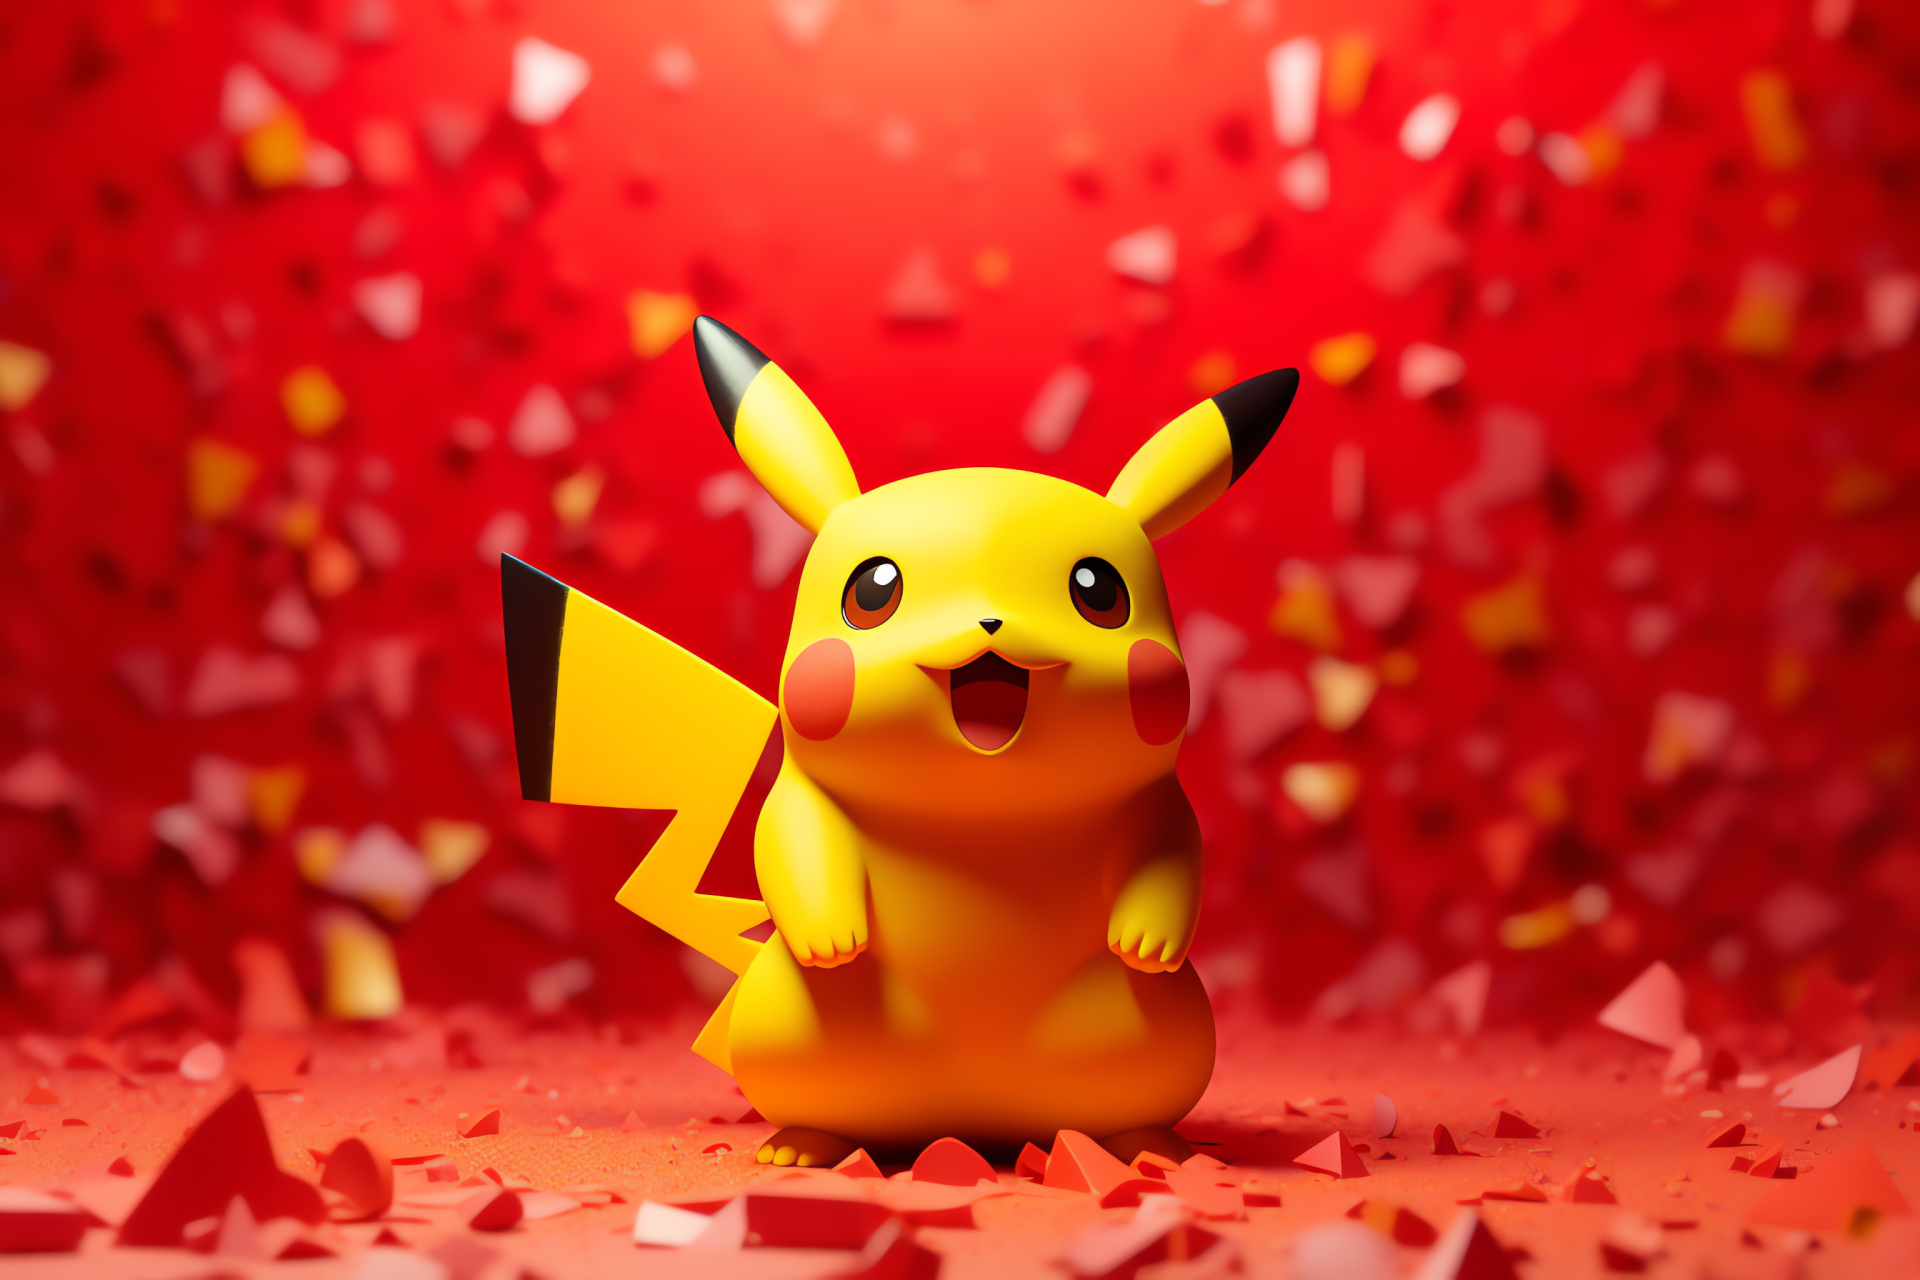 Nintendo Pikachu, Electric mouse Pokemon, Bright fur, Animated expression, Celebratory scene, HD Desktop Wallpaper